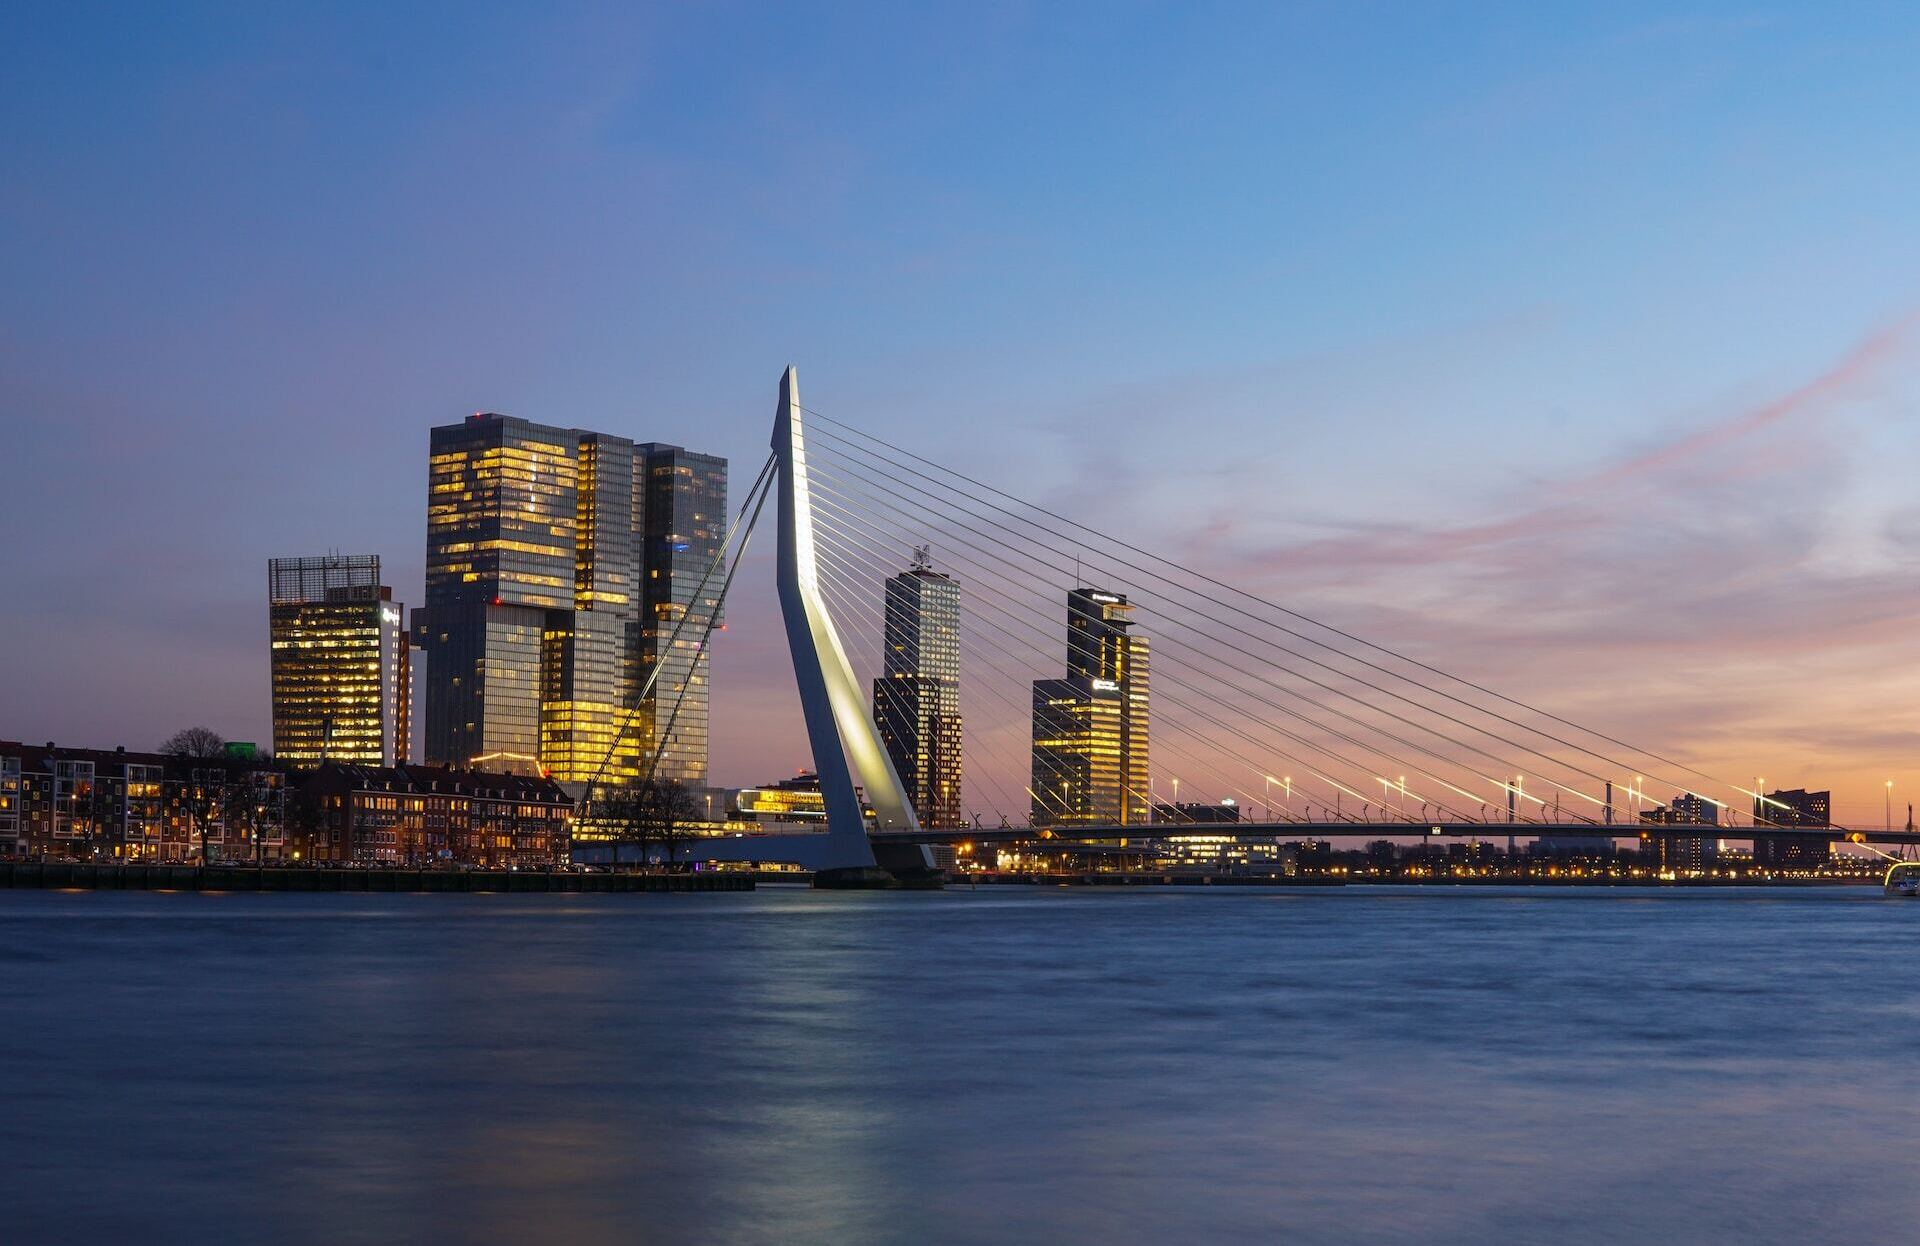 Sunset at the Erasmus Bridge in Rotterdam